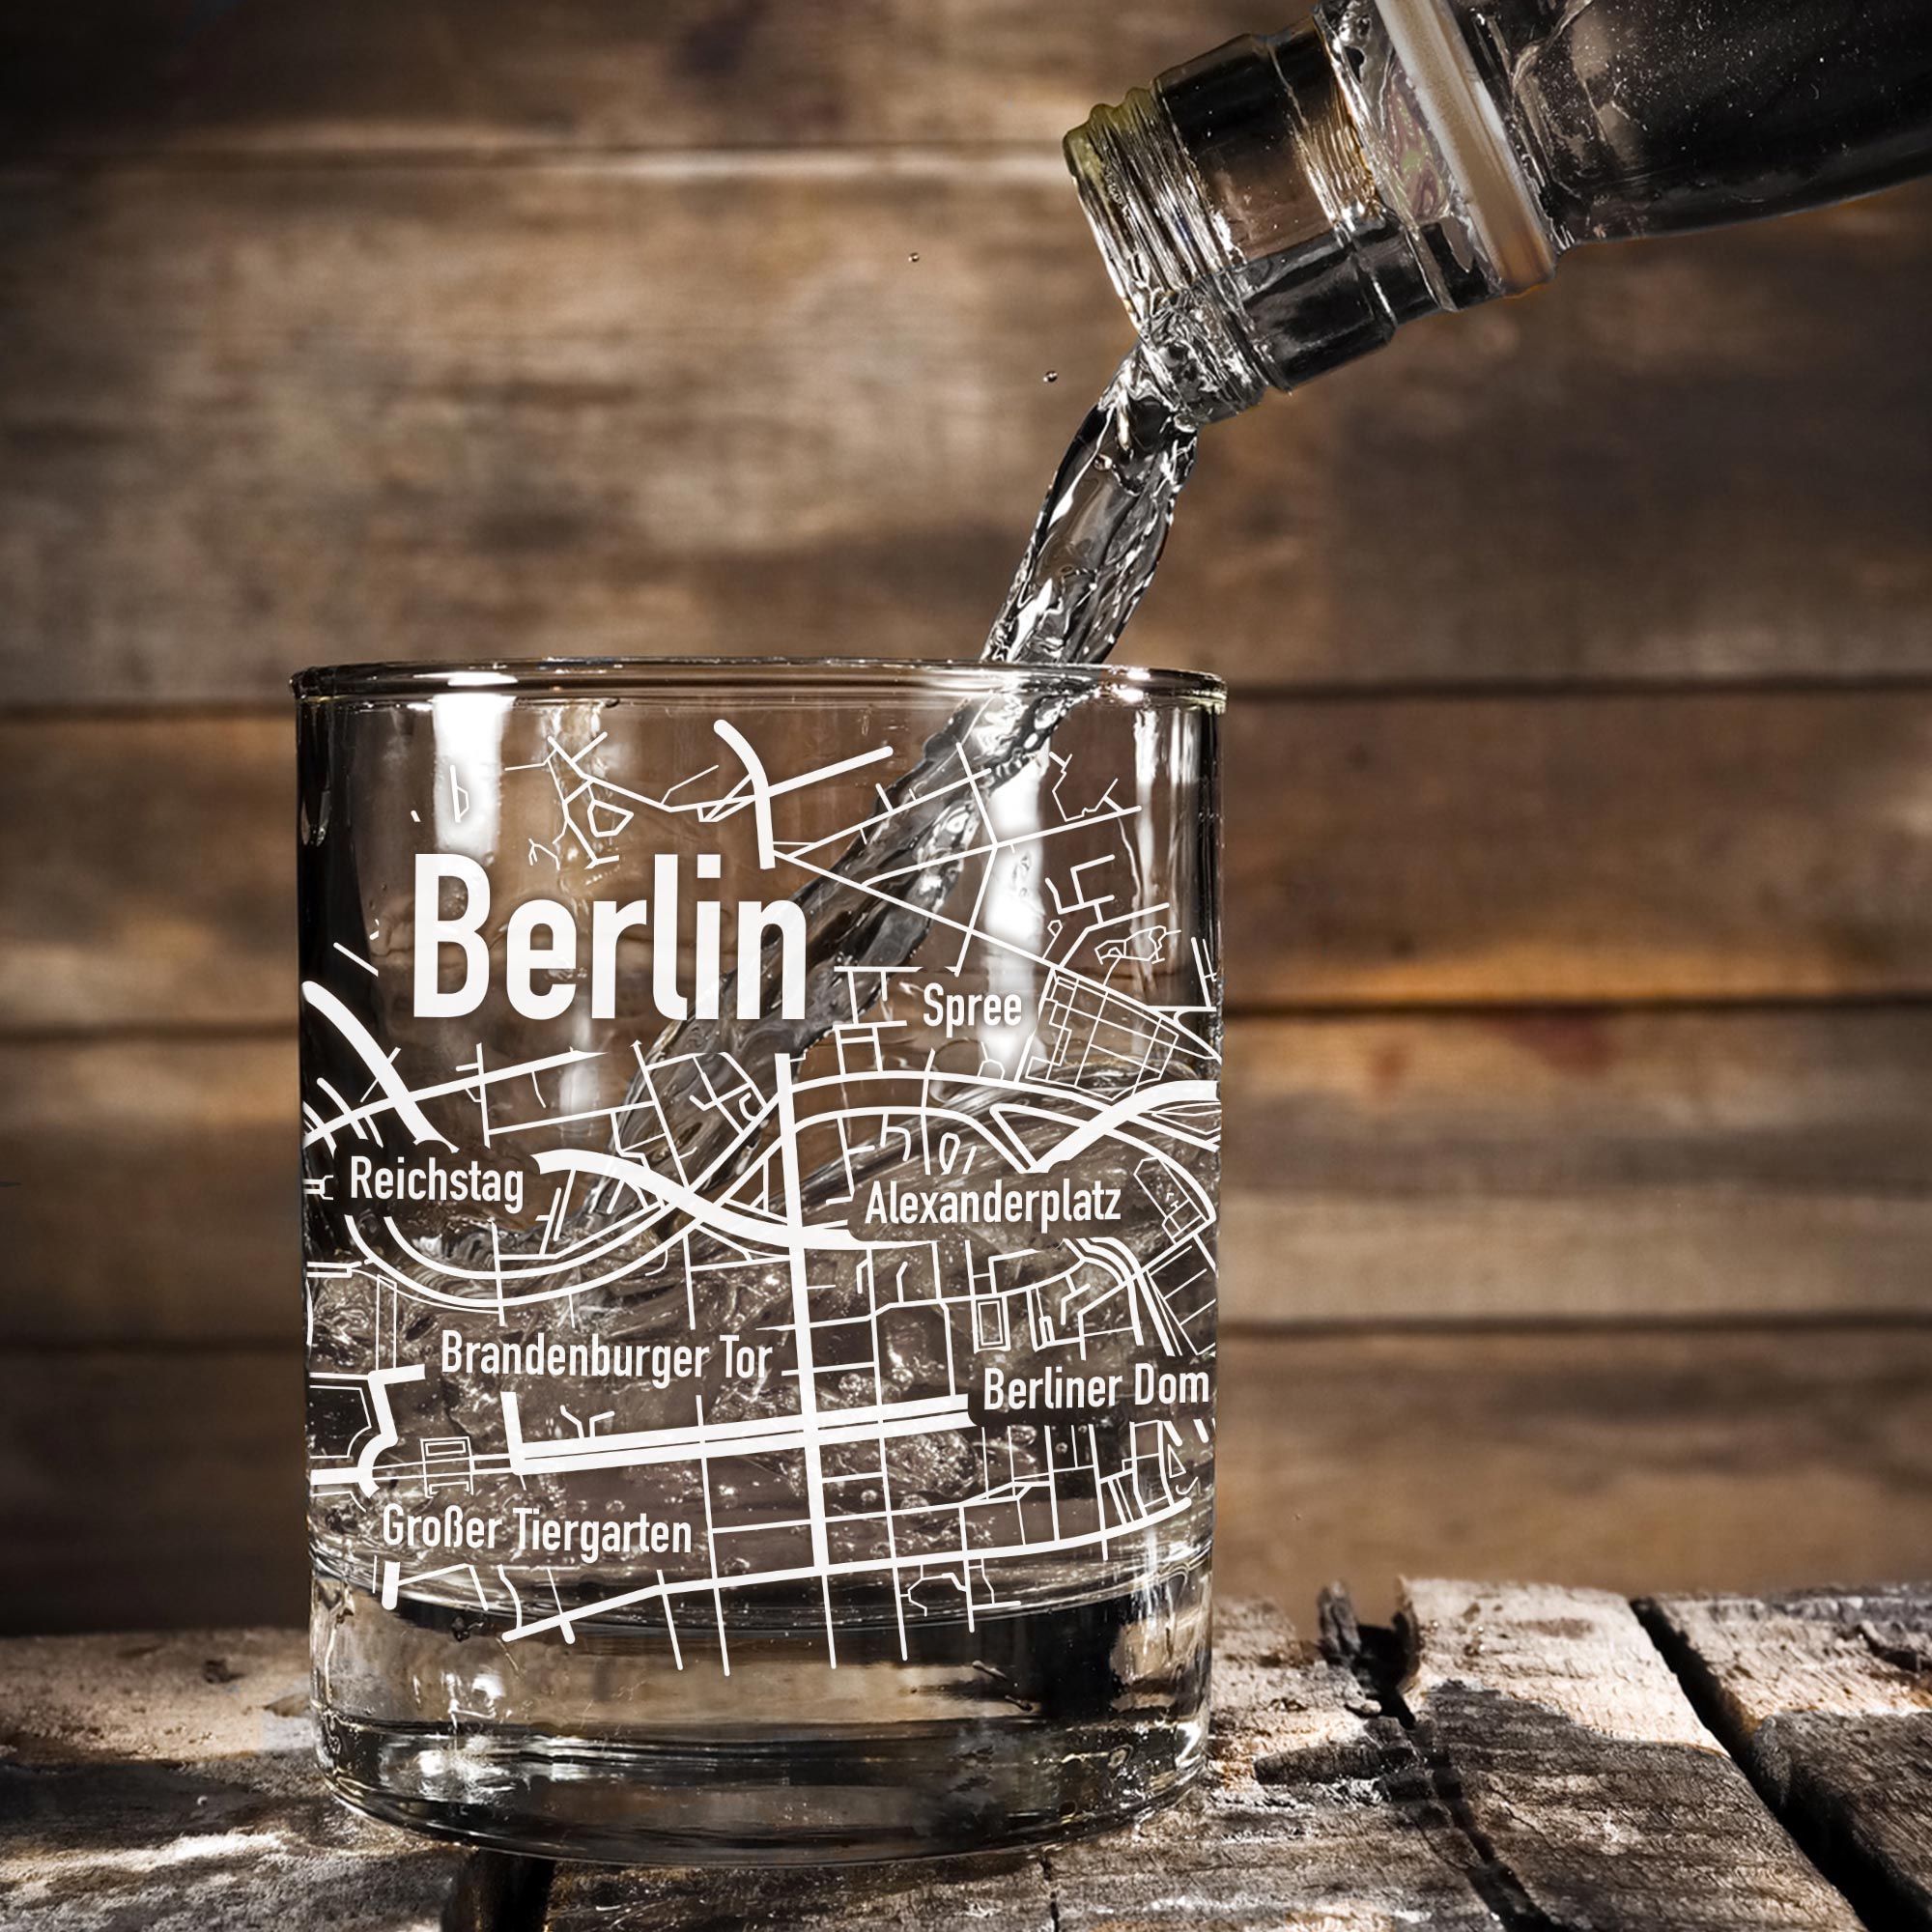  Whiskyglas mit Gravur - Berlin